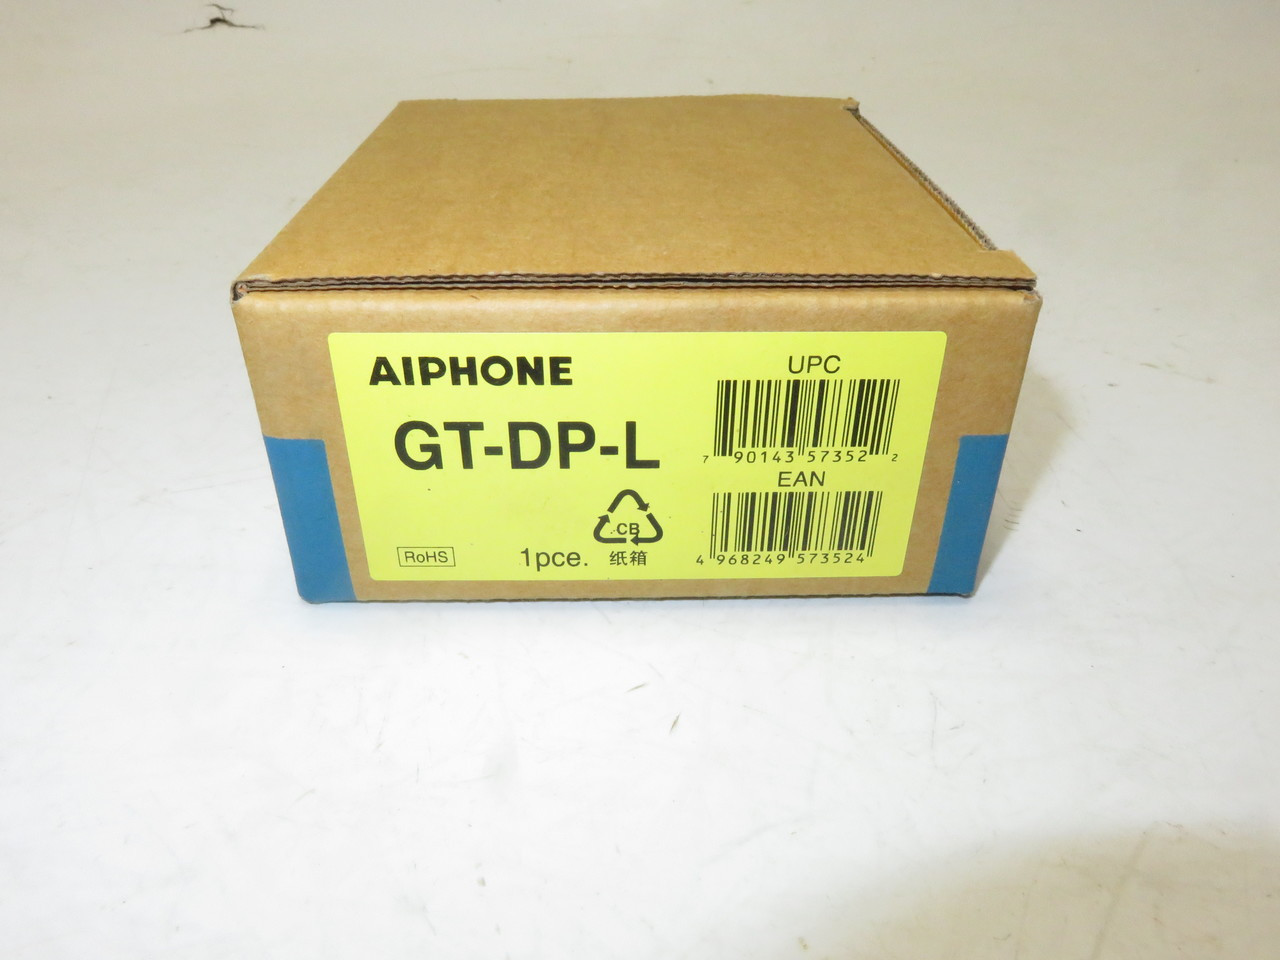 Aiphone GT-DP-L Audio Panel for GT Series, Multi-Tenant Intercom